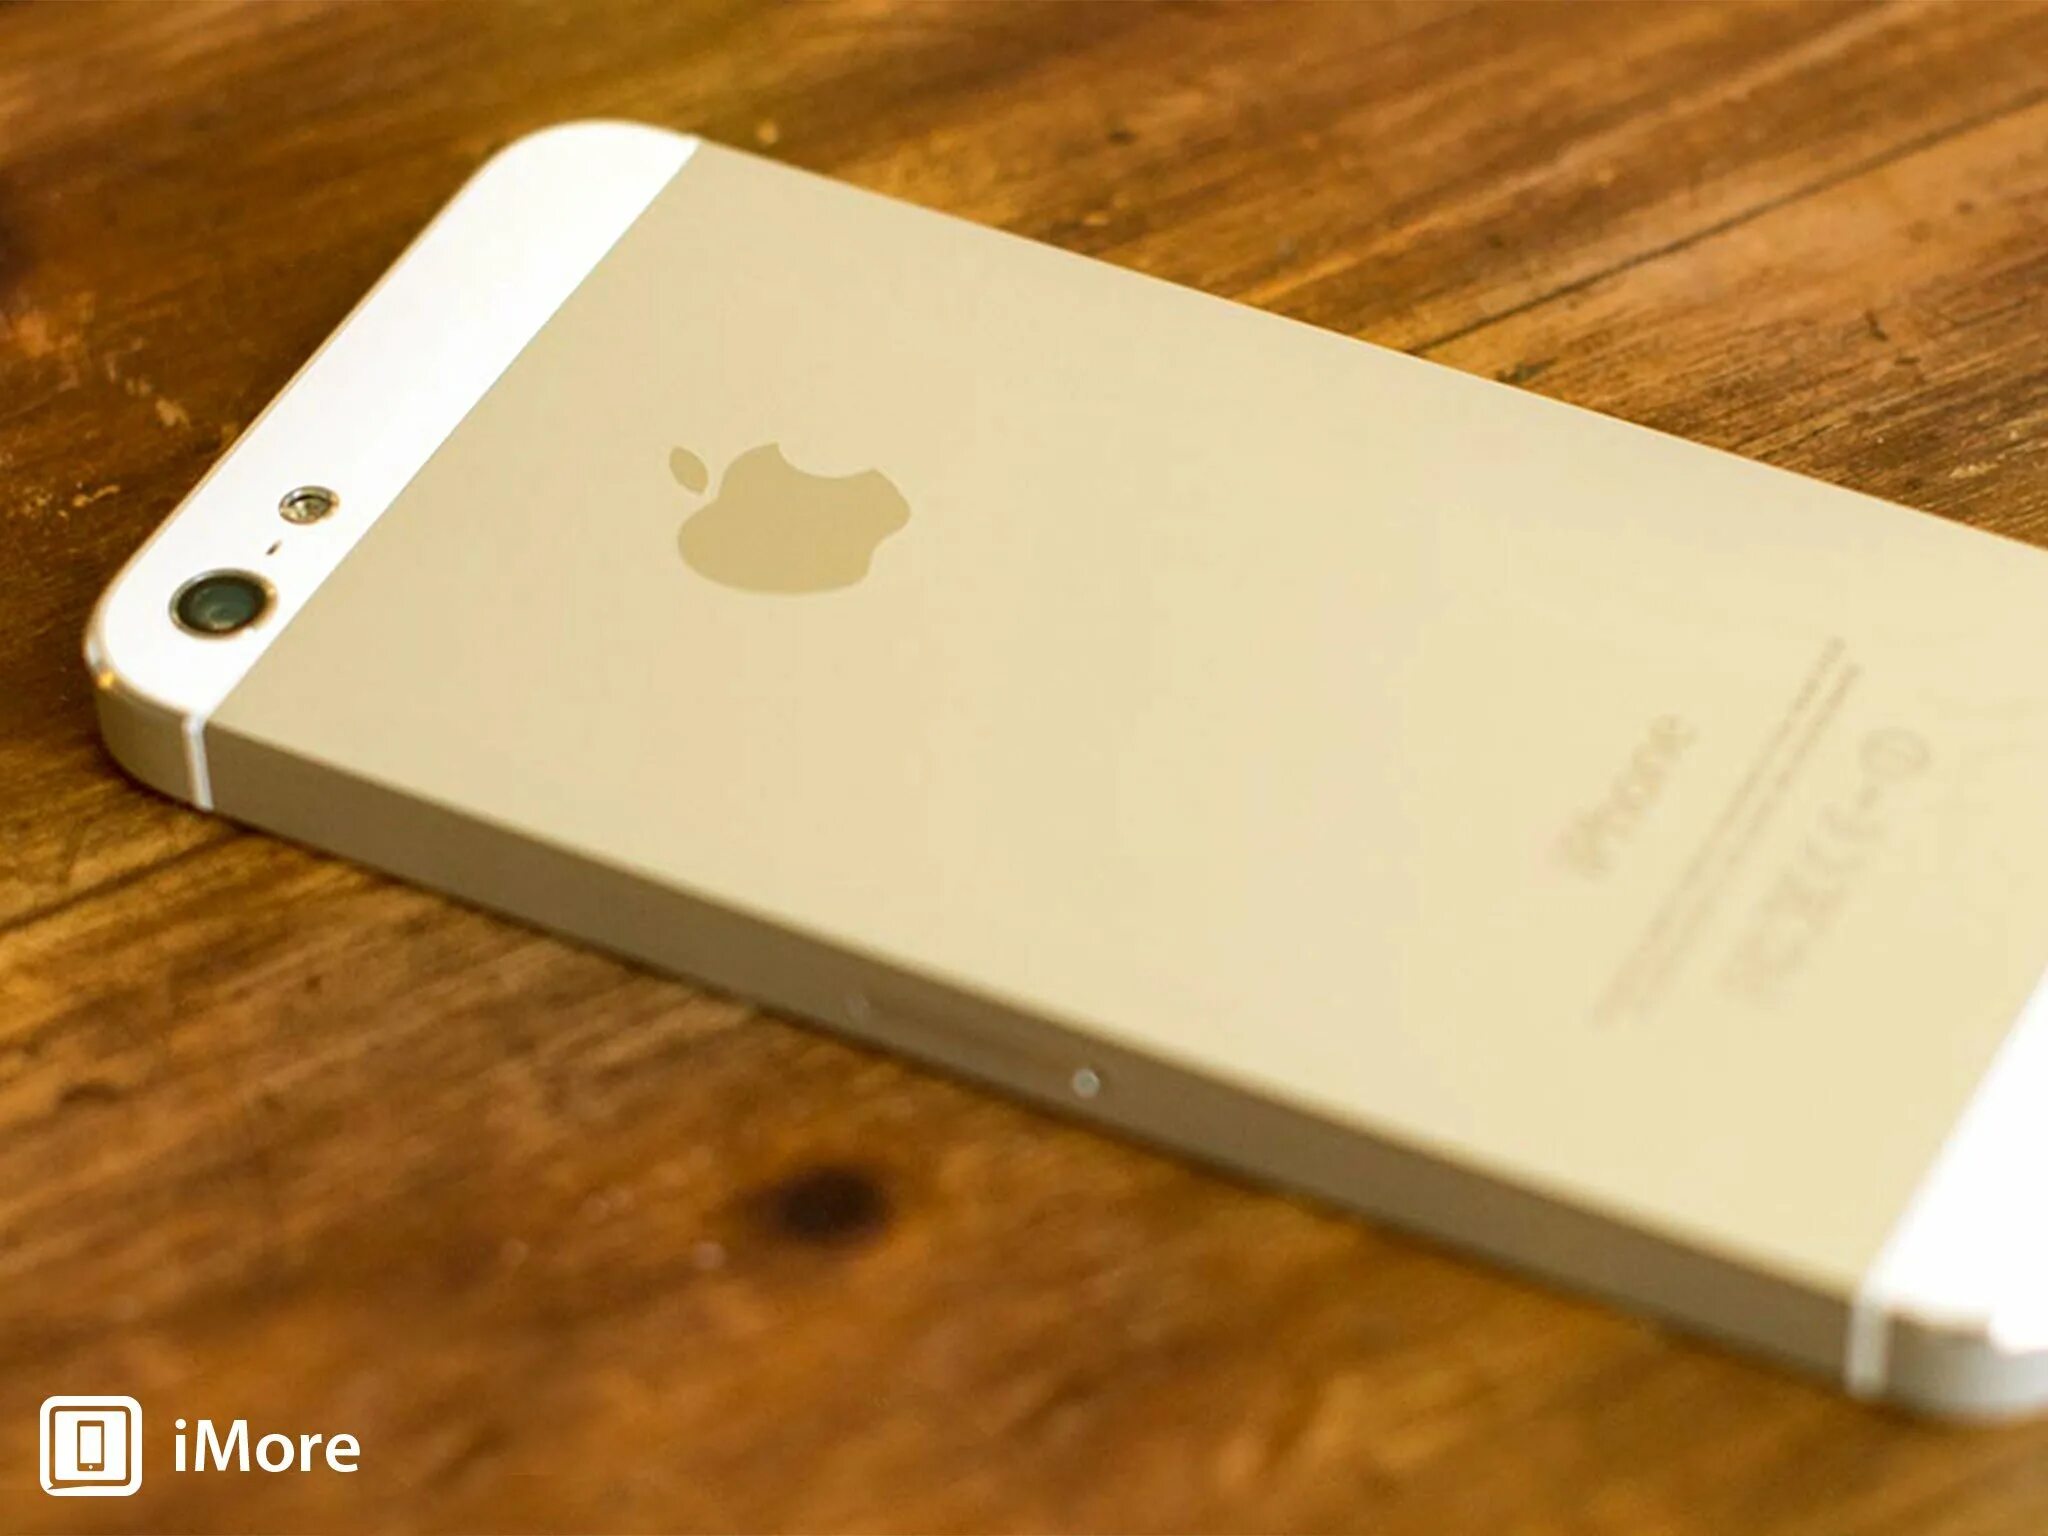 Продается ли айфоны. Iphone 5s. Iphone 5s Gold. Айфон 5s белый. Айфон 5s Голд.